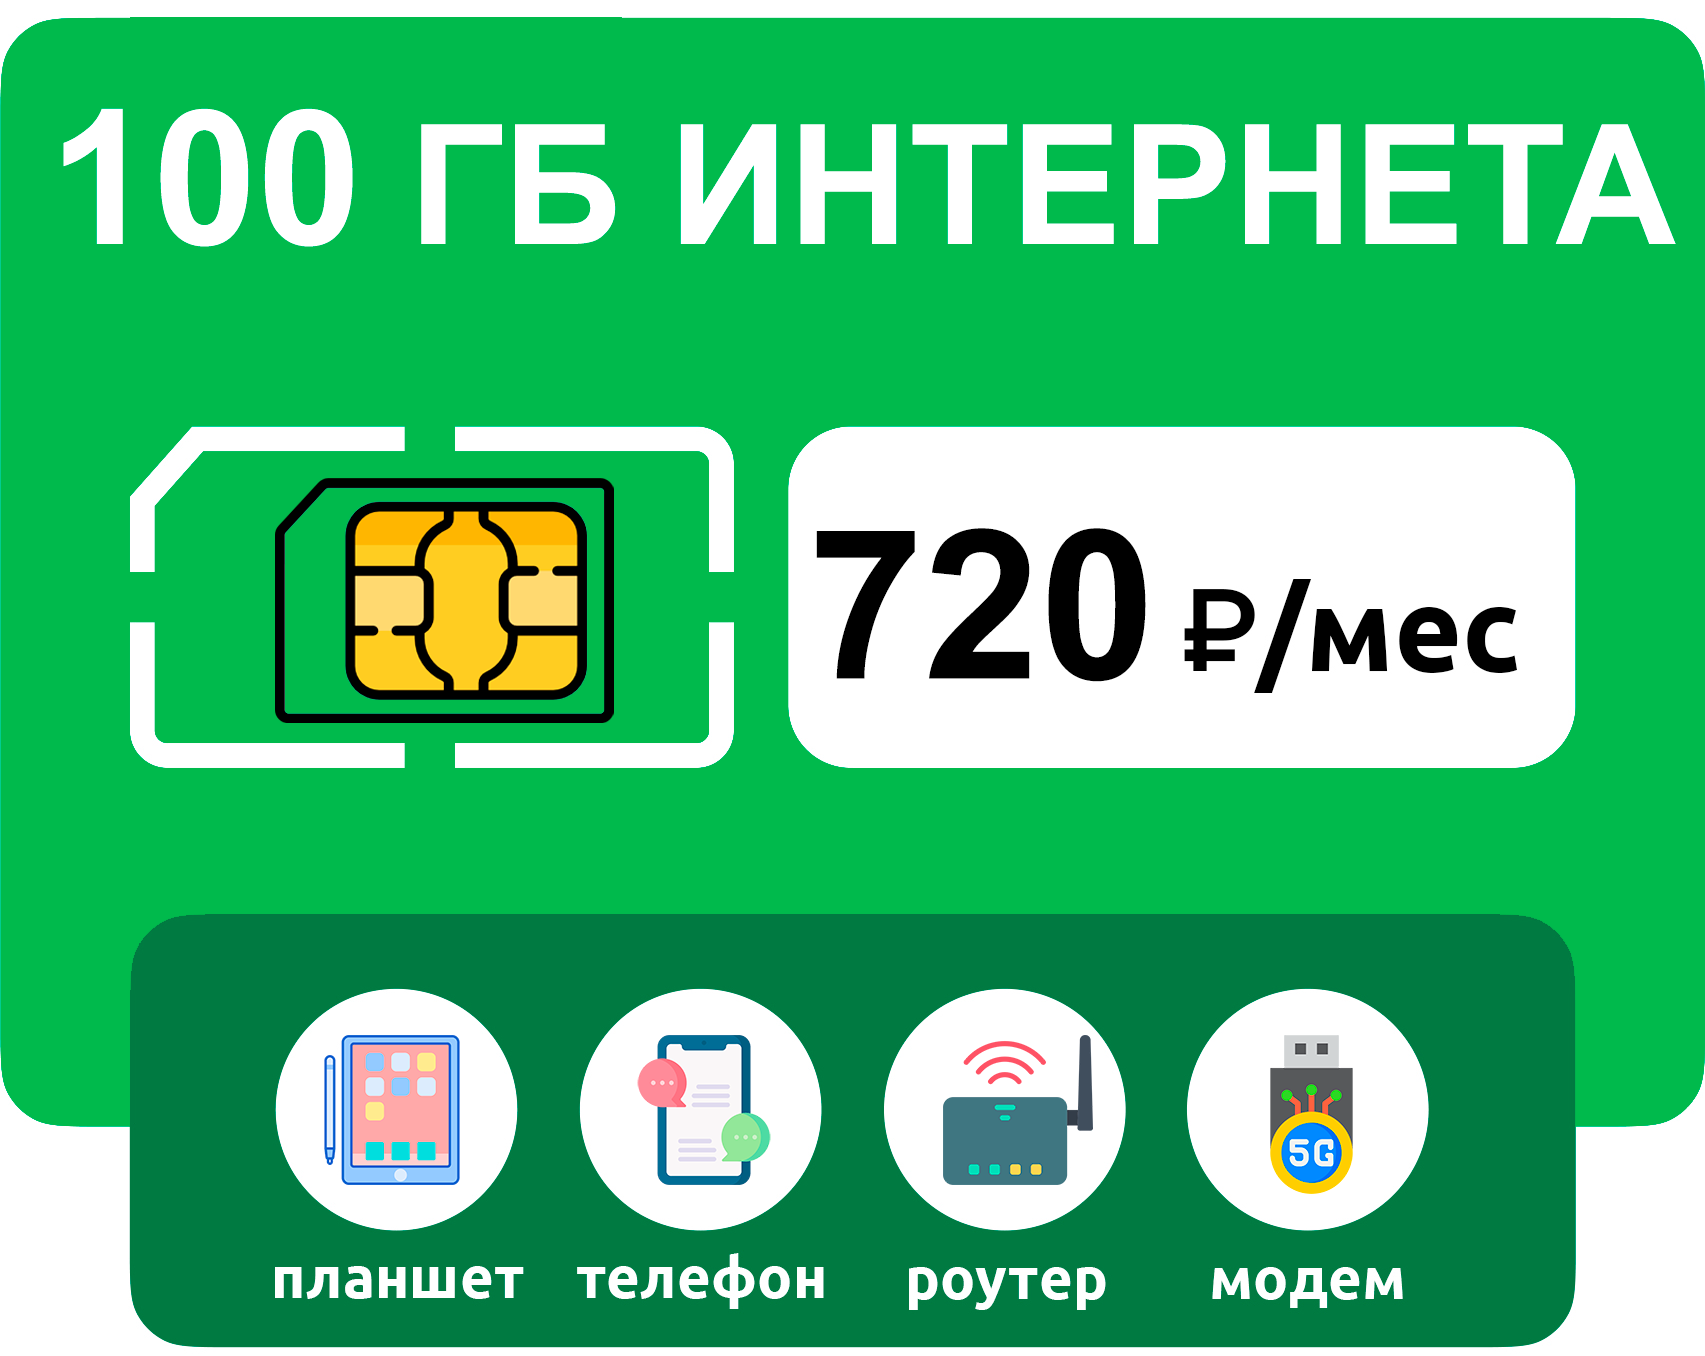 SIM-карта 100 гб интернета 3G/4G за 600 руб/мес (модемы роутеры планшеты) + раздача торренты (Россия)